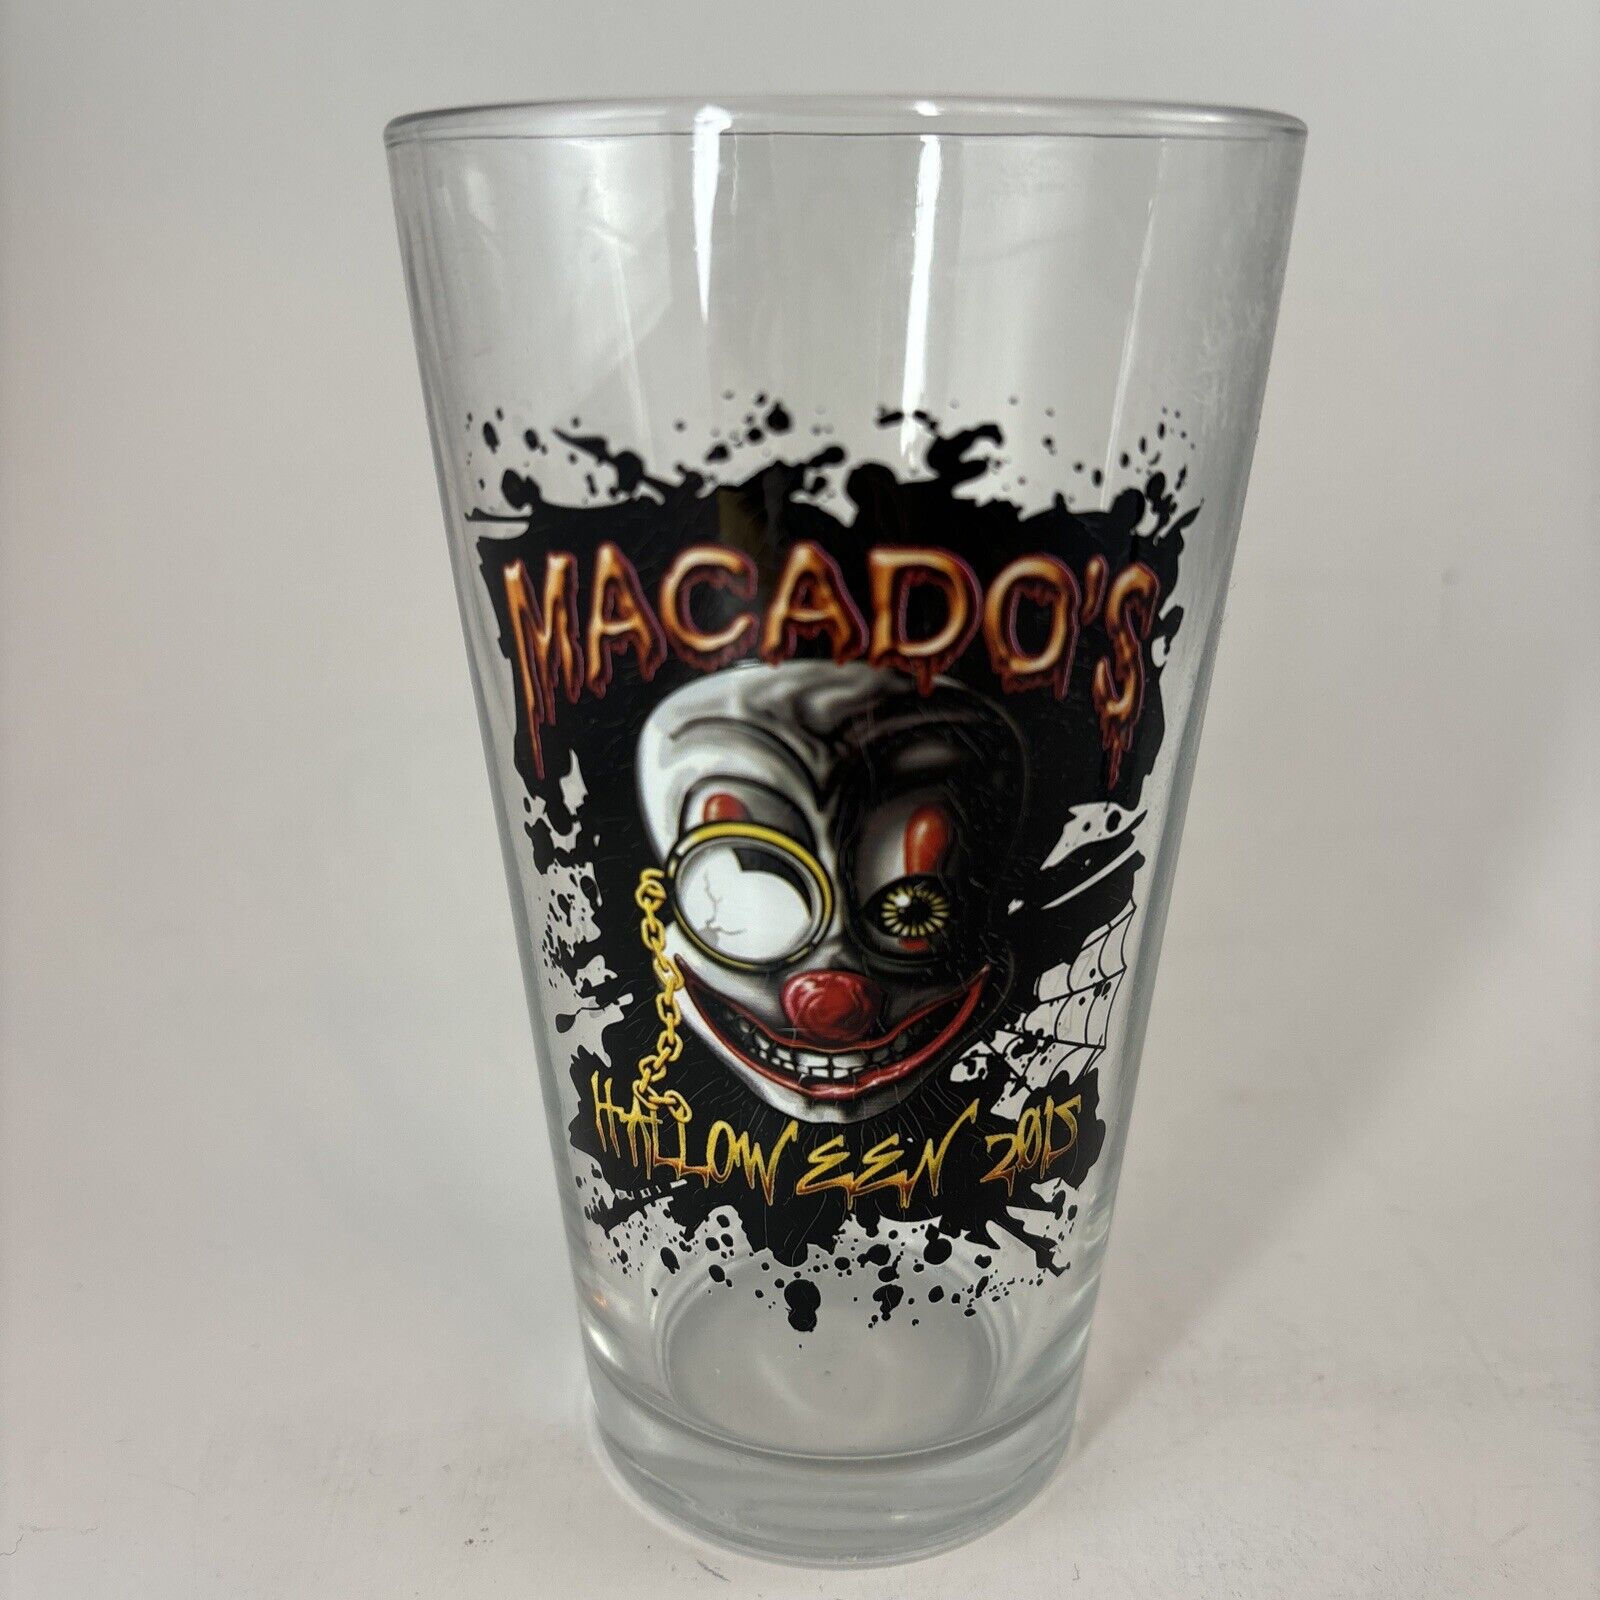 2015 Macado’s HALLOWEEN Crazy clown cobwebs, monocle Pint Beer Glass